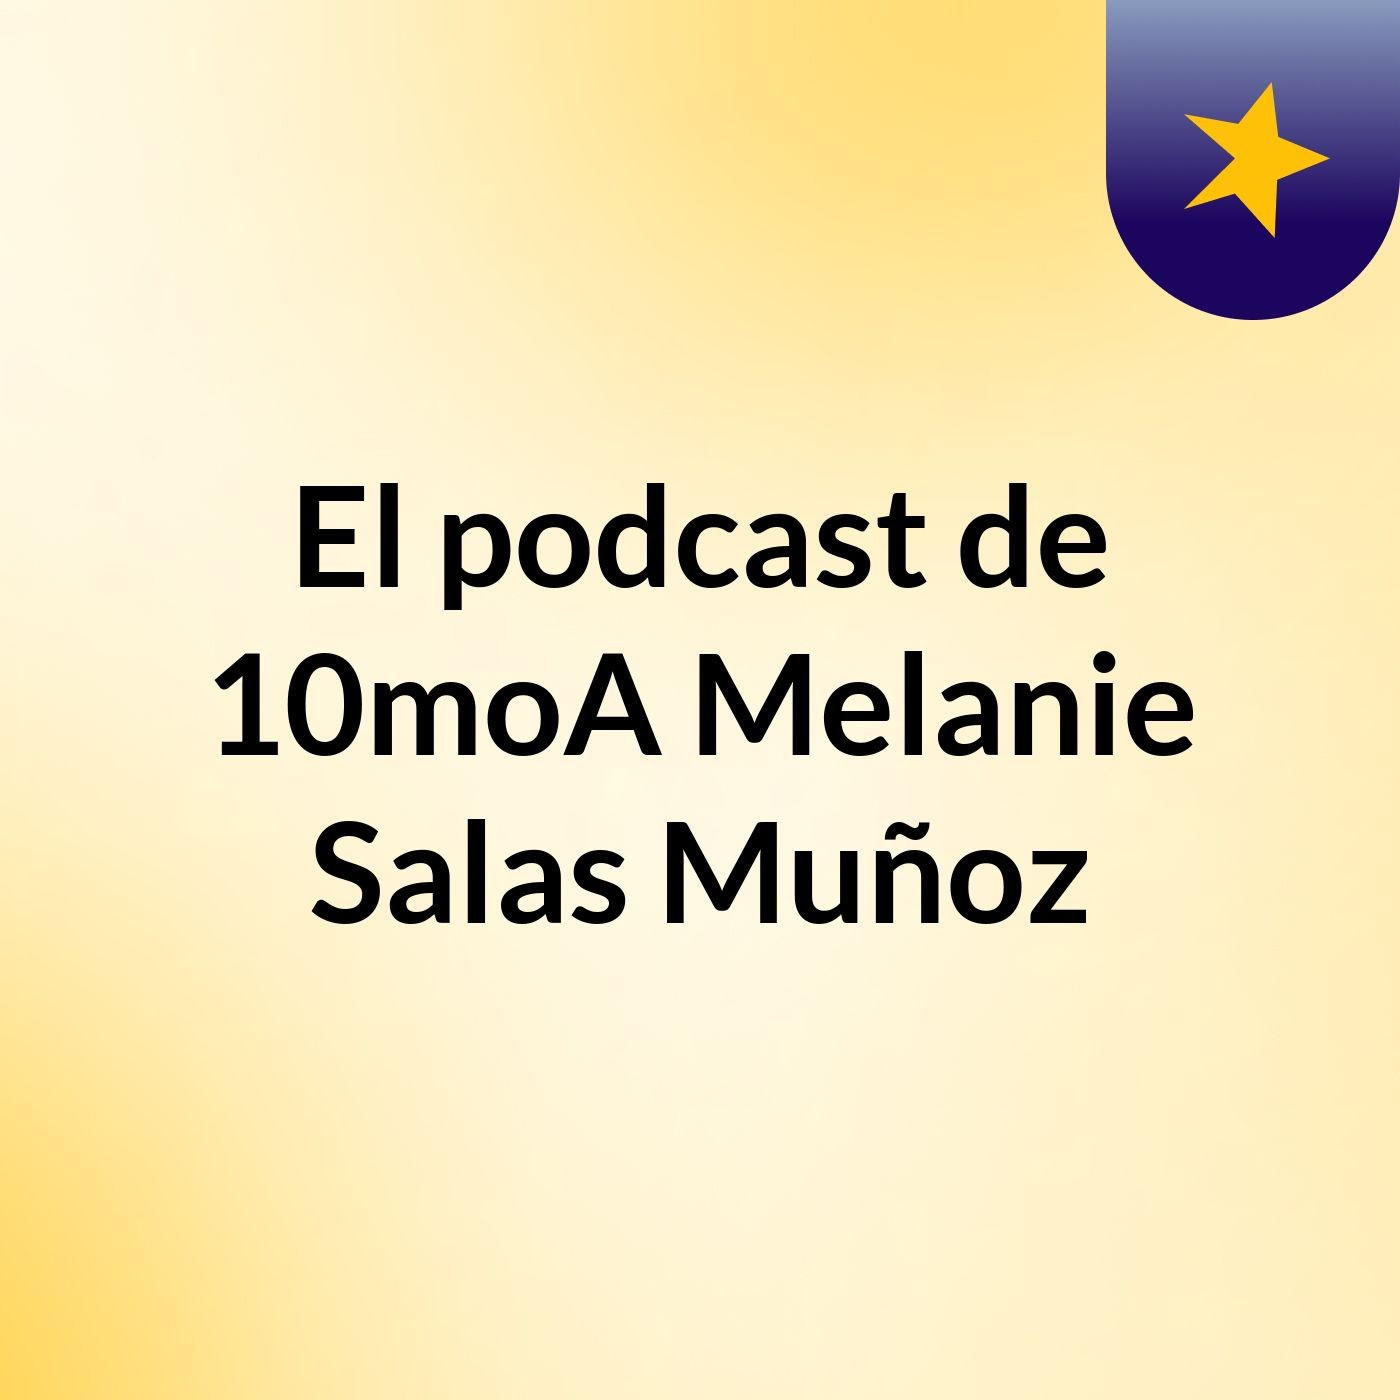 El podcast de 10moA Melanie Salas Muñoz